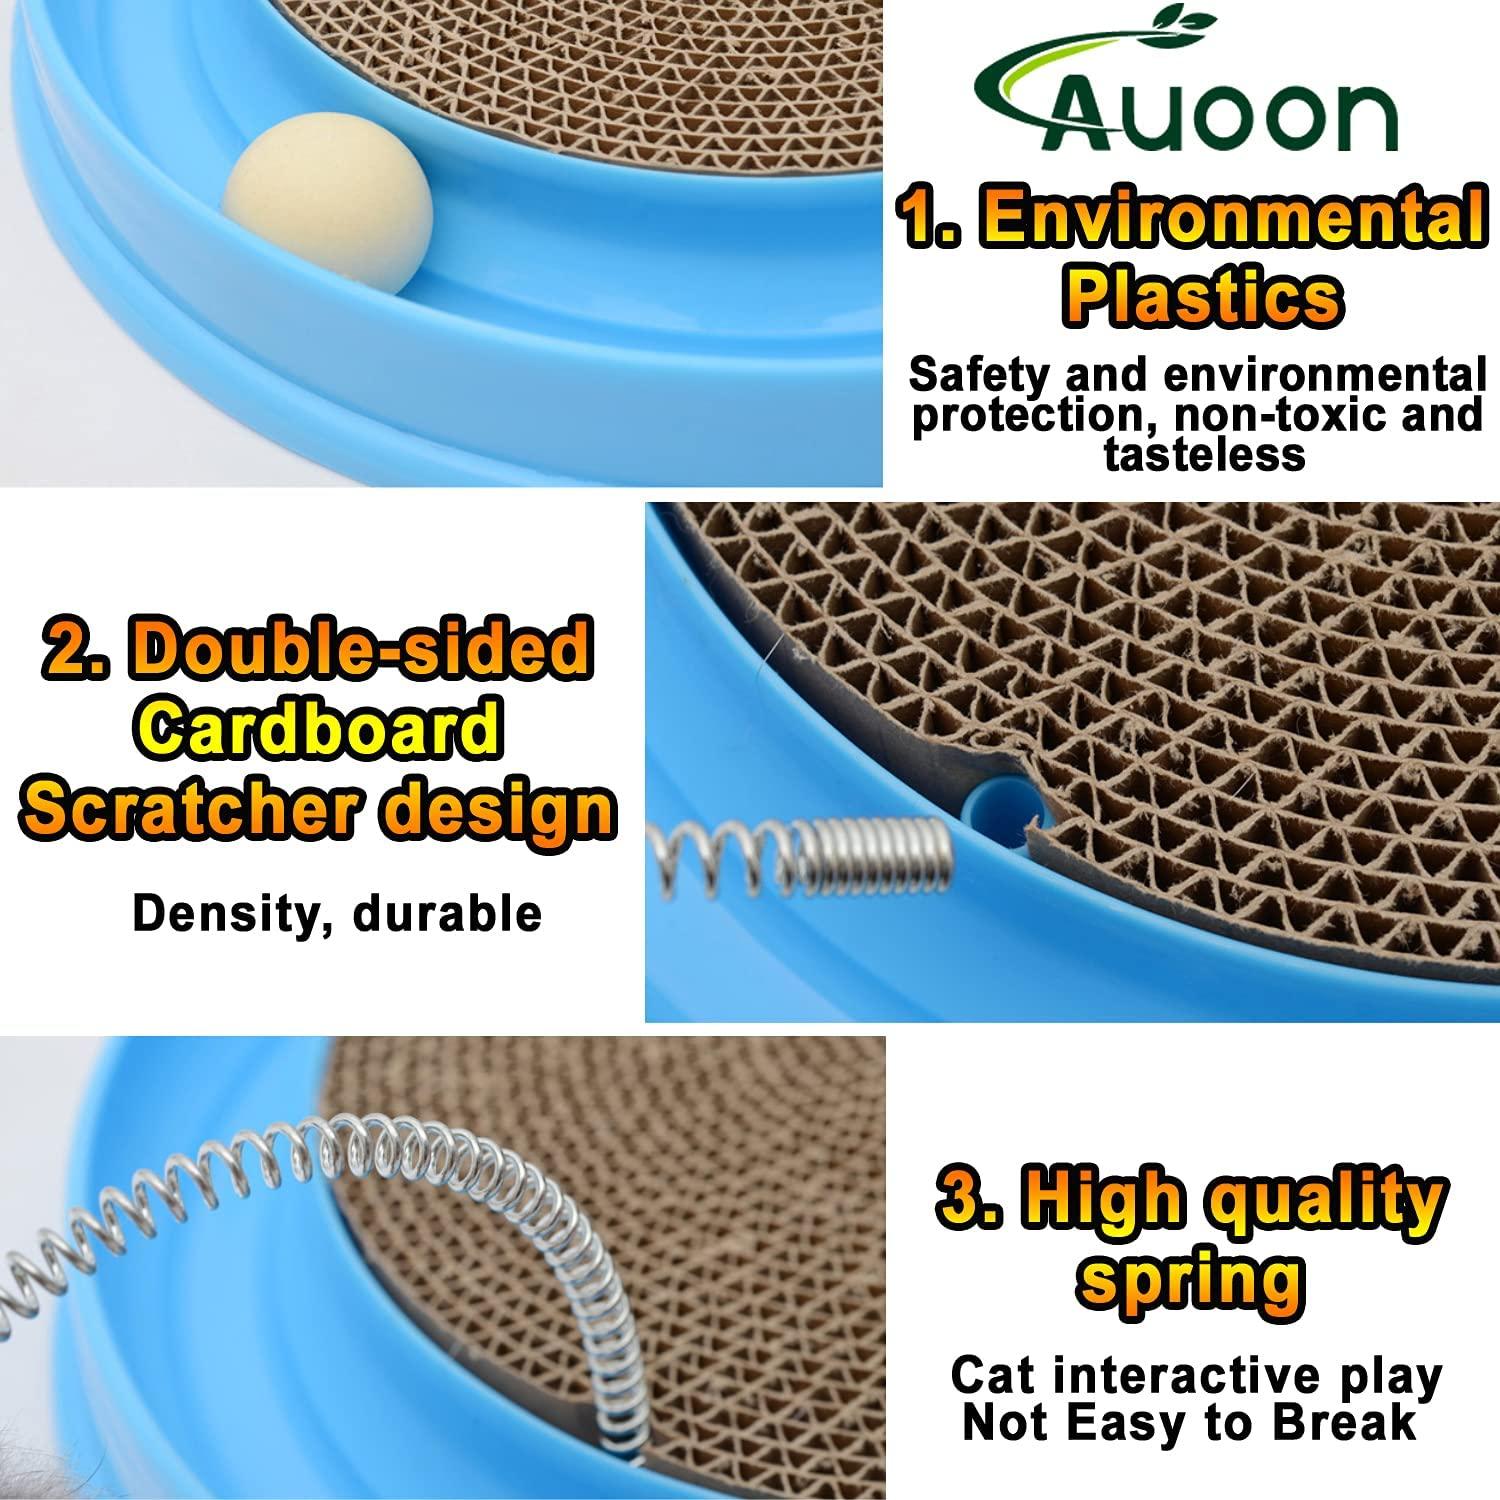 Auoon Cat Scratcher Toy